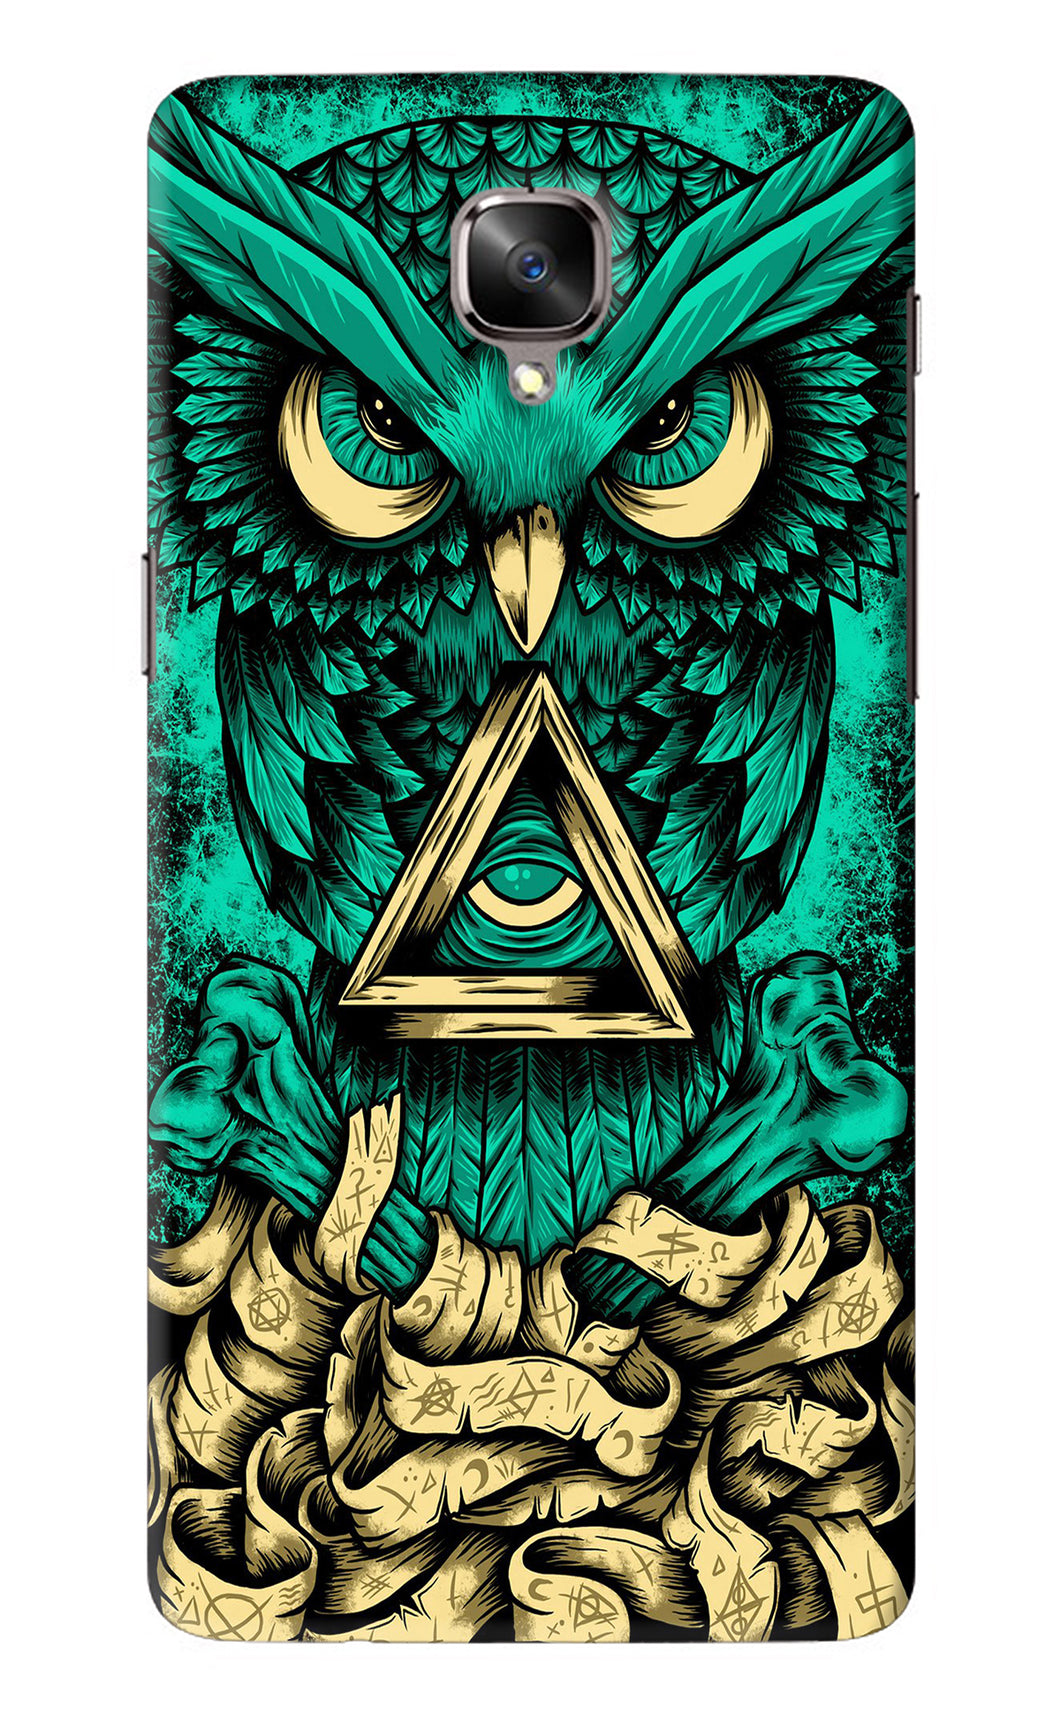 Green Owl OnePlus 3T Back Skin Wrap